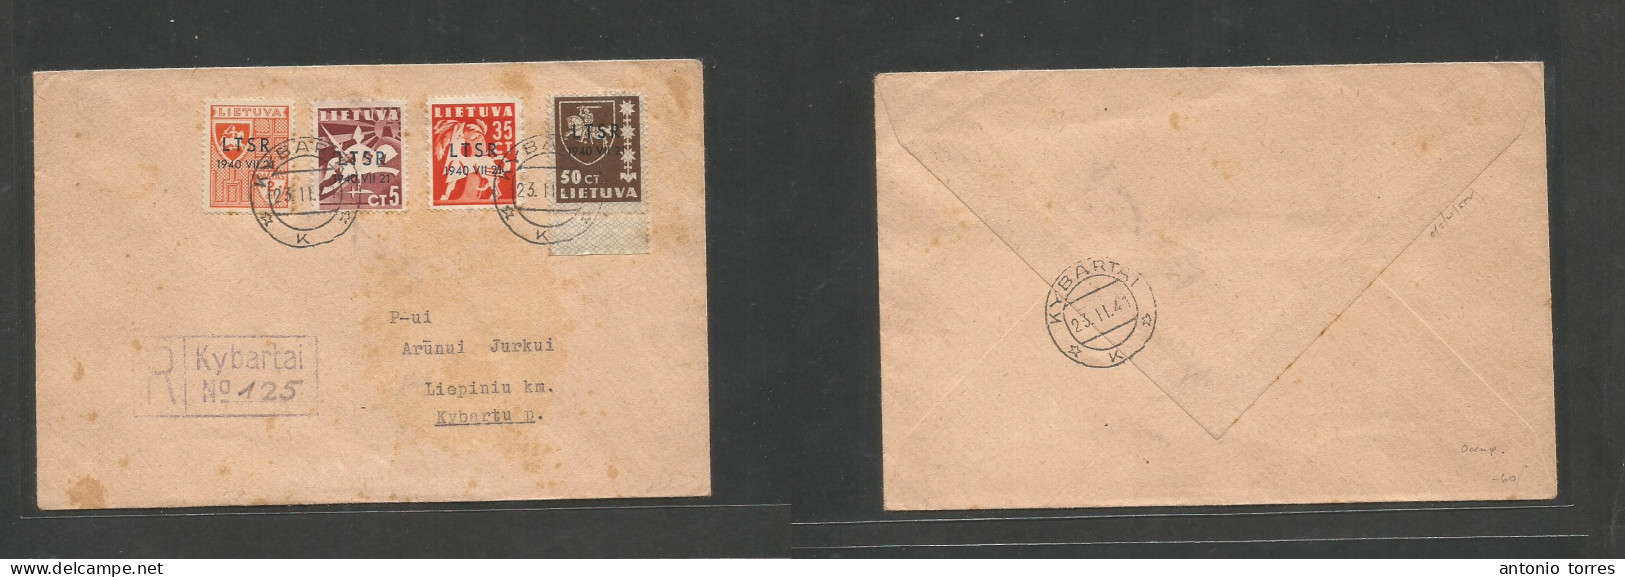 Lithuania. 1941 (23 Febr) Kyhartai Local Registered Multifkd Envelope. LTSR 1 July 40 Ovptd Arrival Cds. Scarce On Cover - Lituania